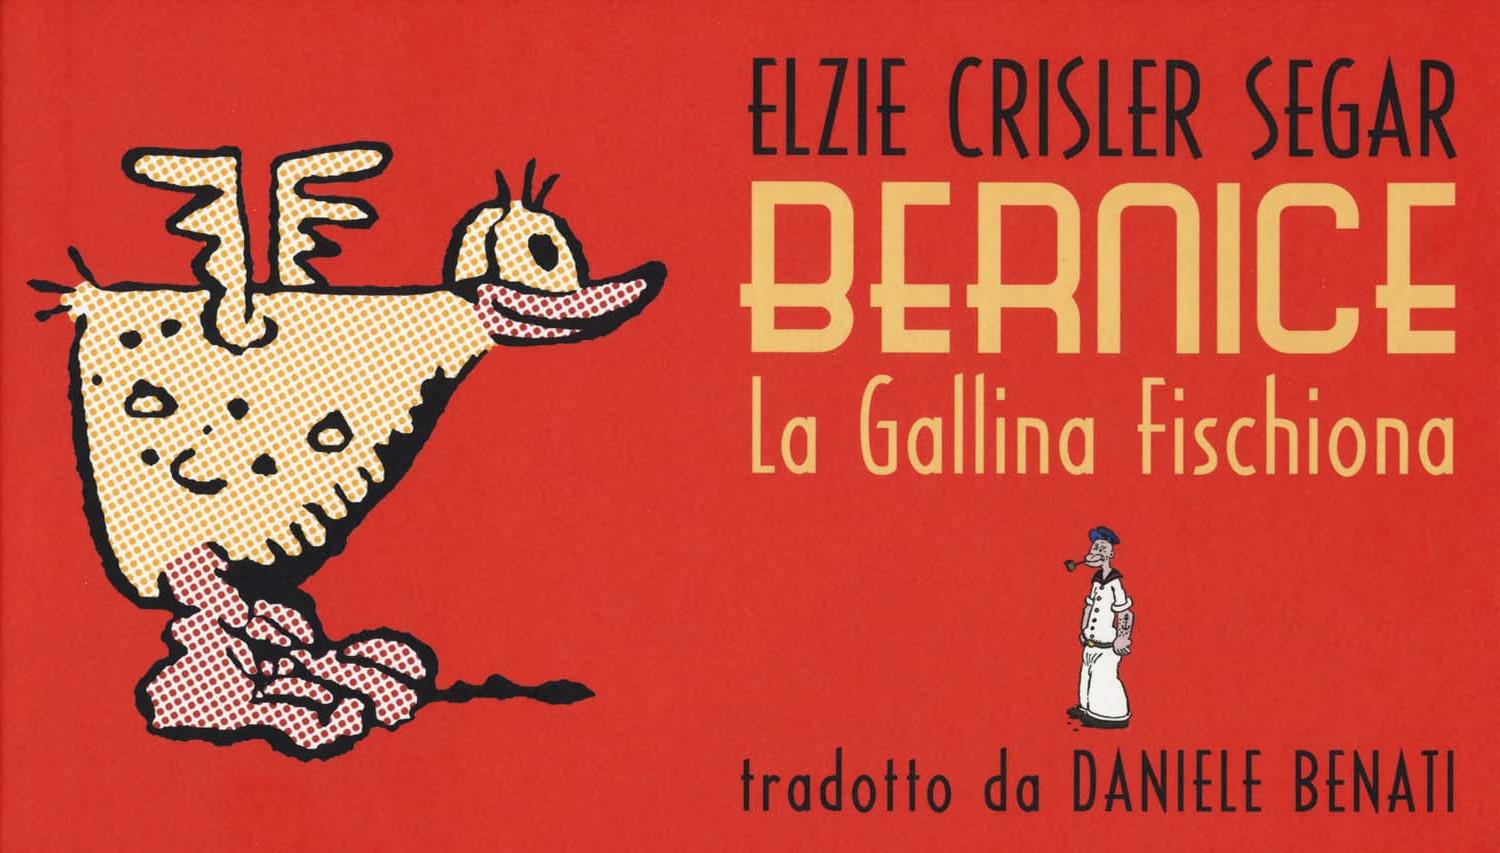 Segar Elzie Crisler - Bernice La Gallina Fischiona